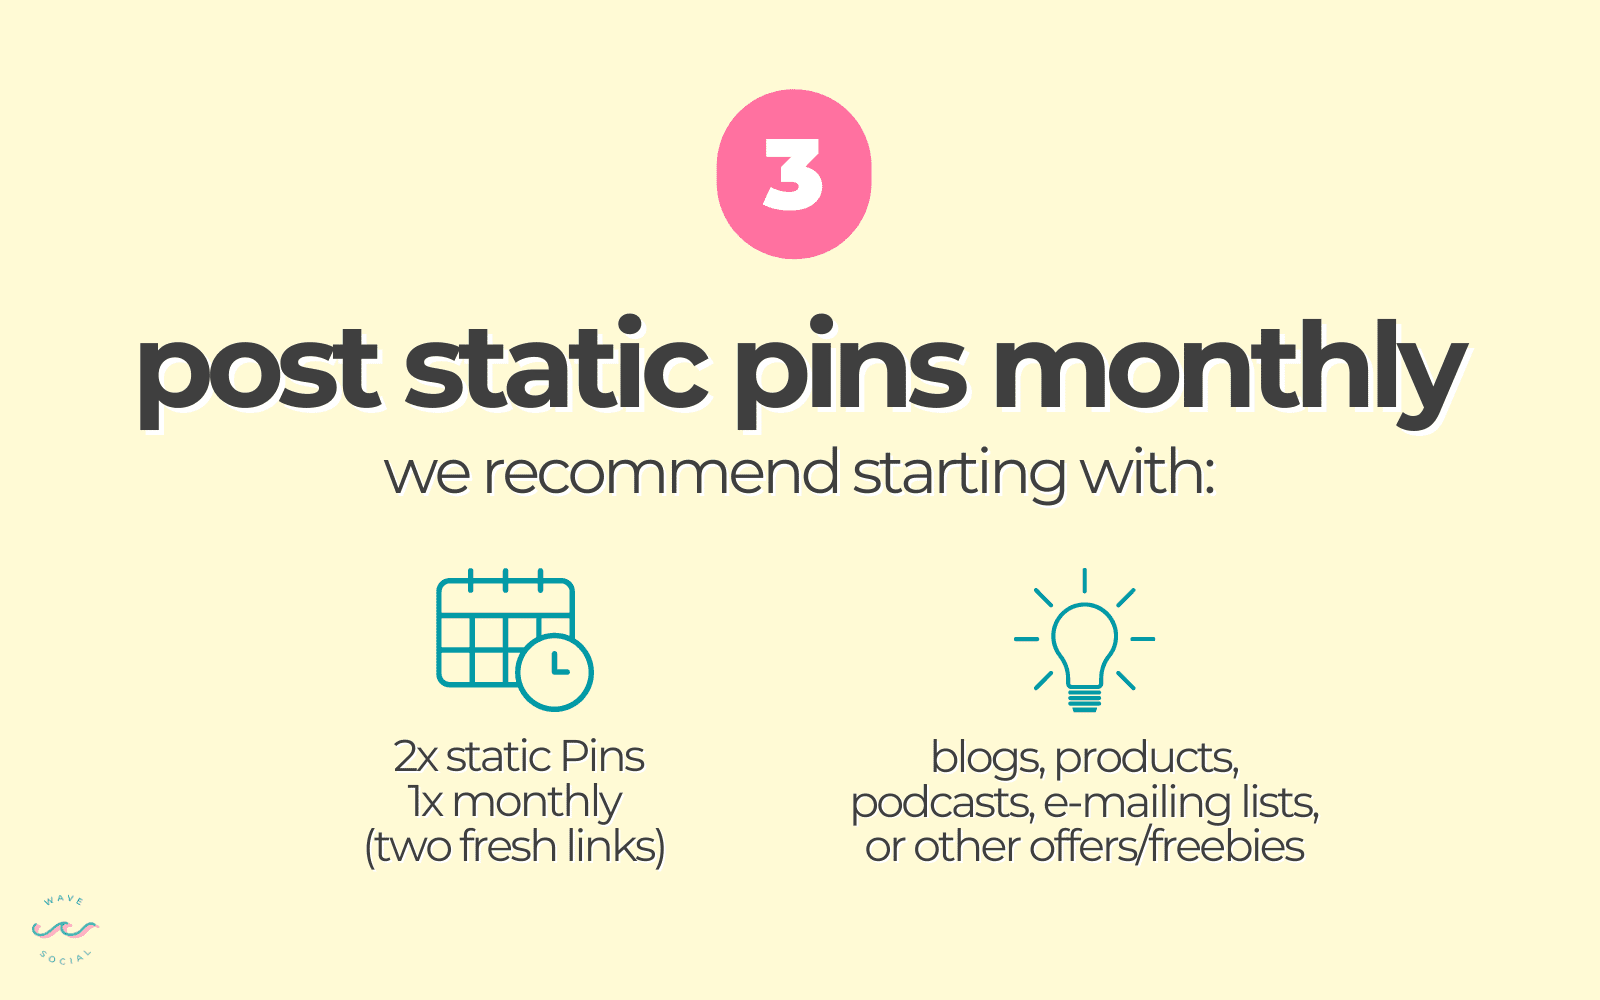 post new static pins 2x per month